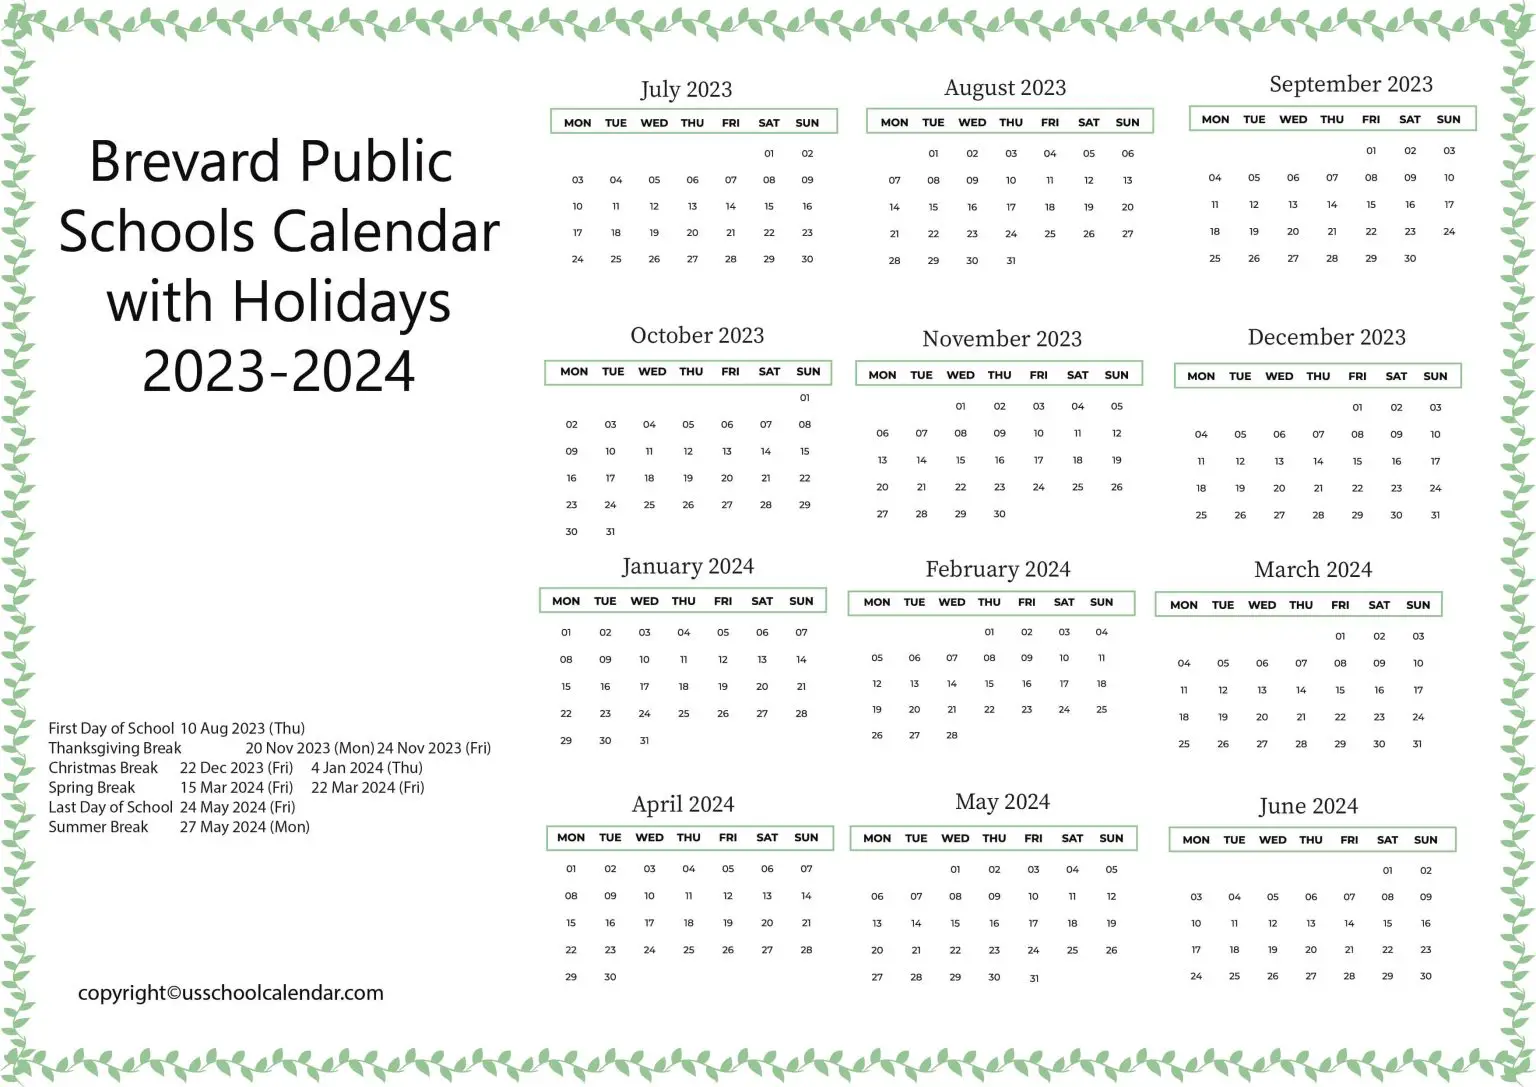 Brevard Public Schools Calendar with Holidays 20232024